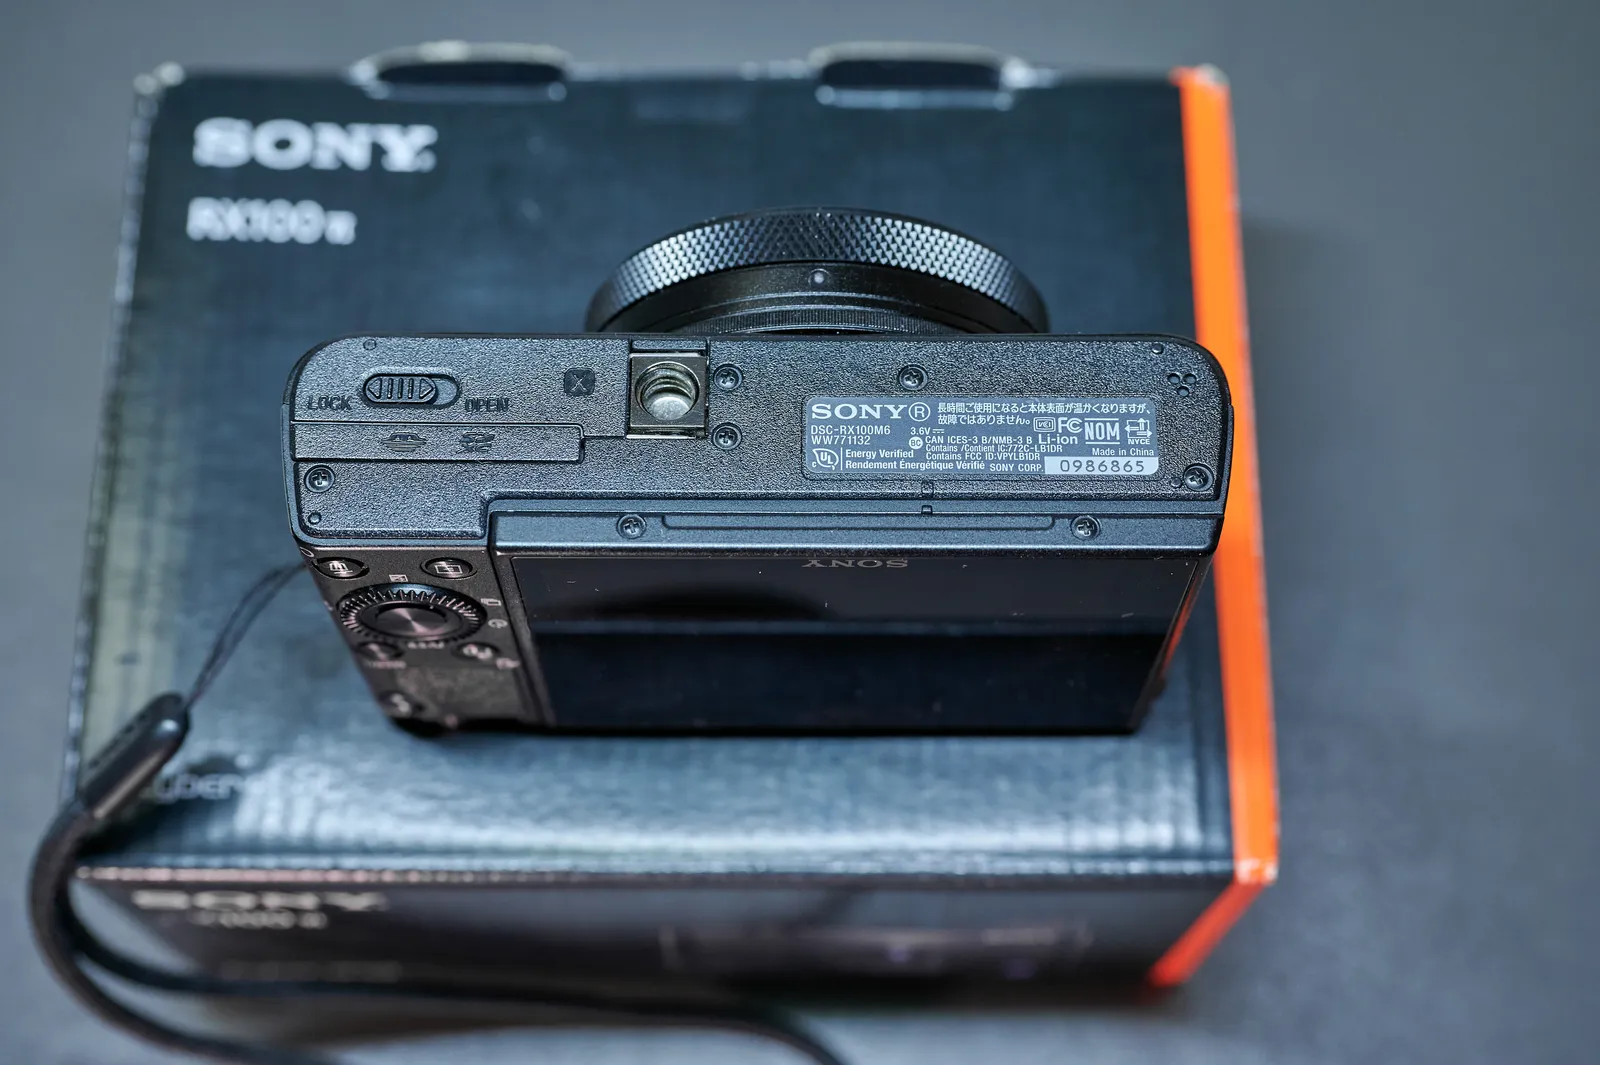 Sony Cyber-shot DSC-RX100 VI M6 Digital Camera From Tony's Gear